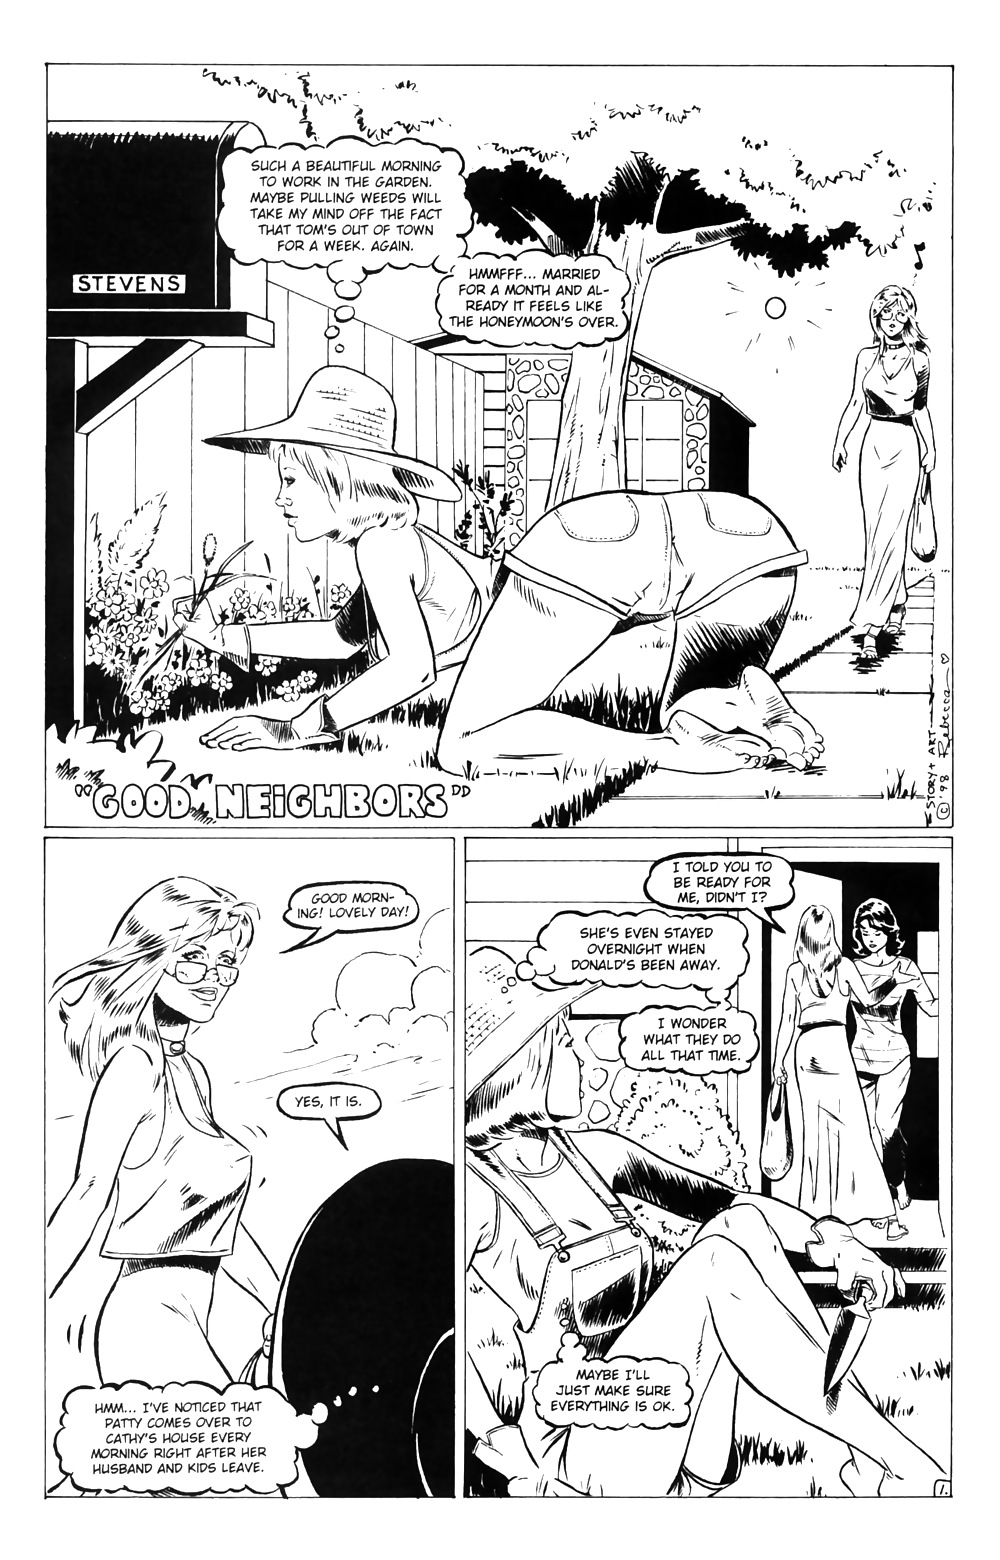 Hausfrauen Am Spiel # 01 - Eros-Comics Von Rebecca - April 2002 #36196530